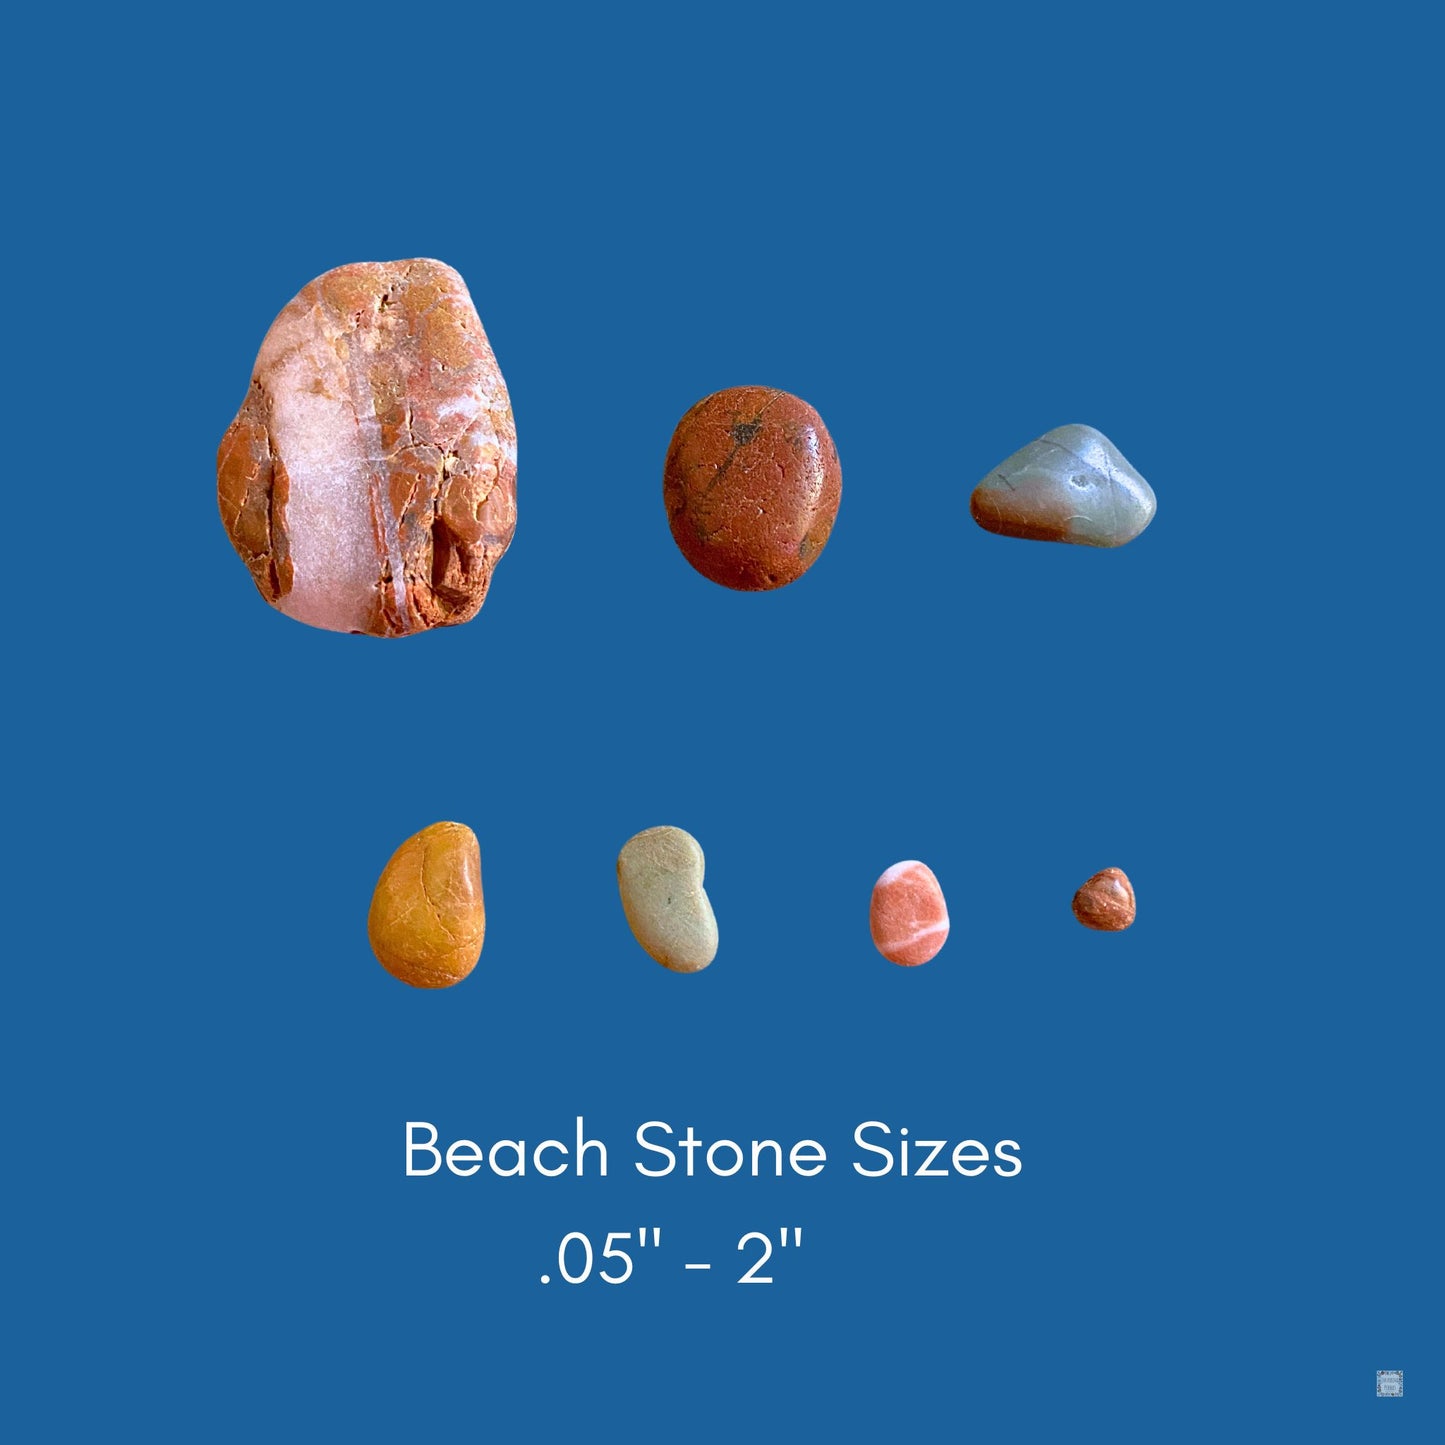 Beach stone size examples 0.5"-2"